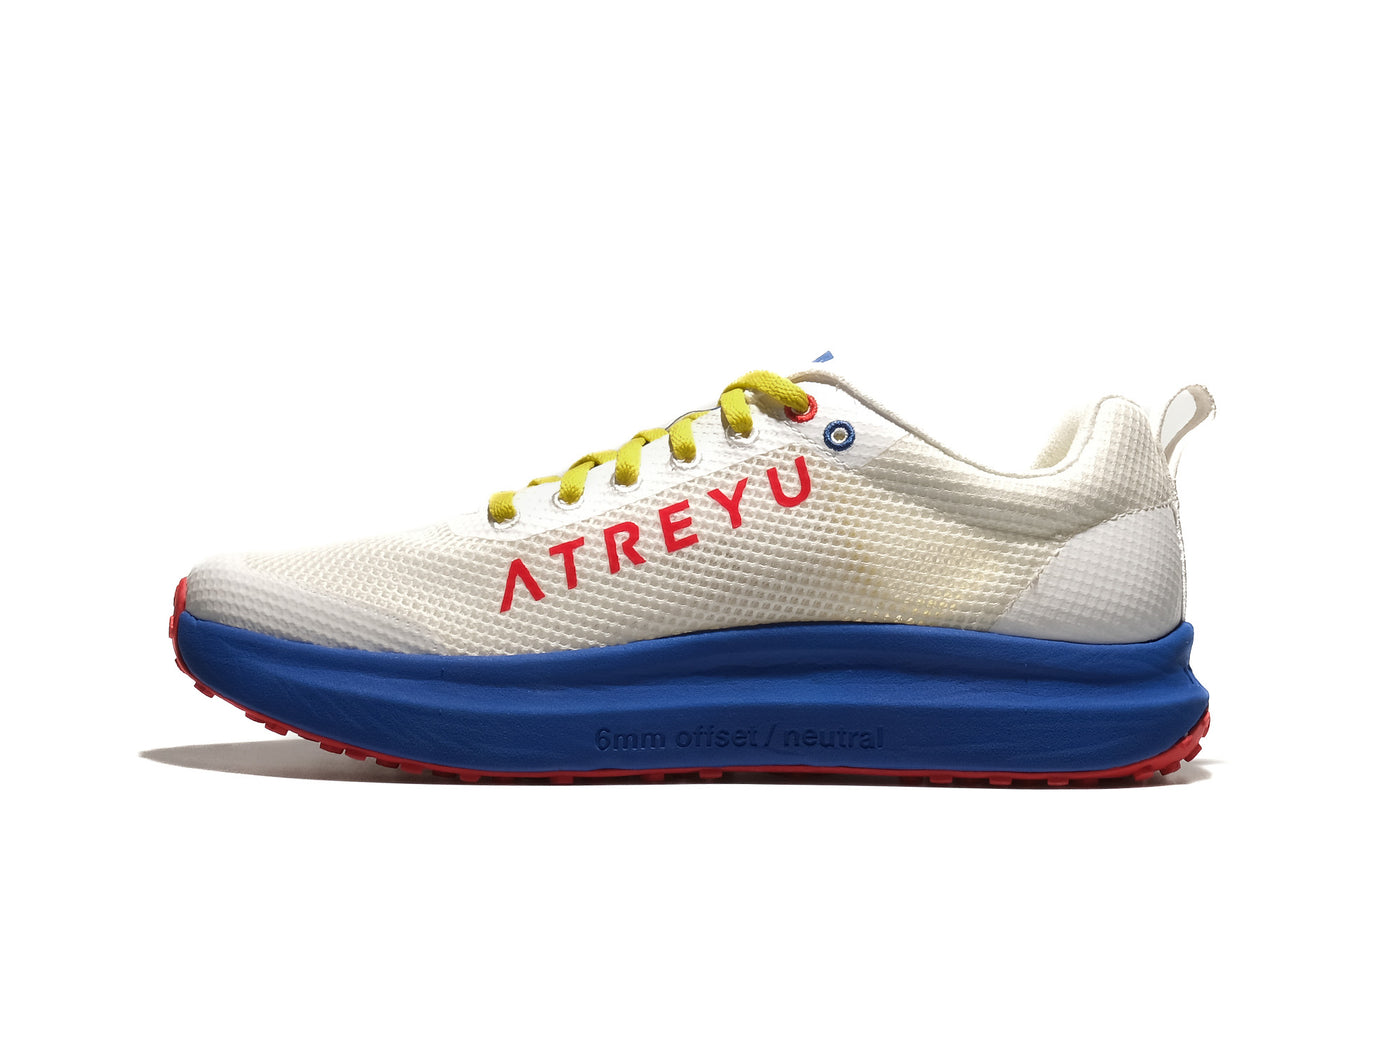 Daily Trainer - Atreyu Running Shoes Side